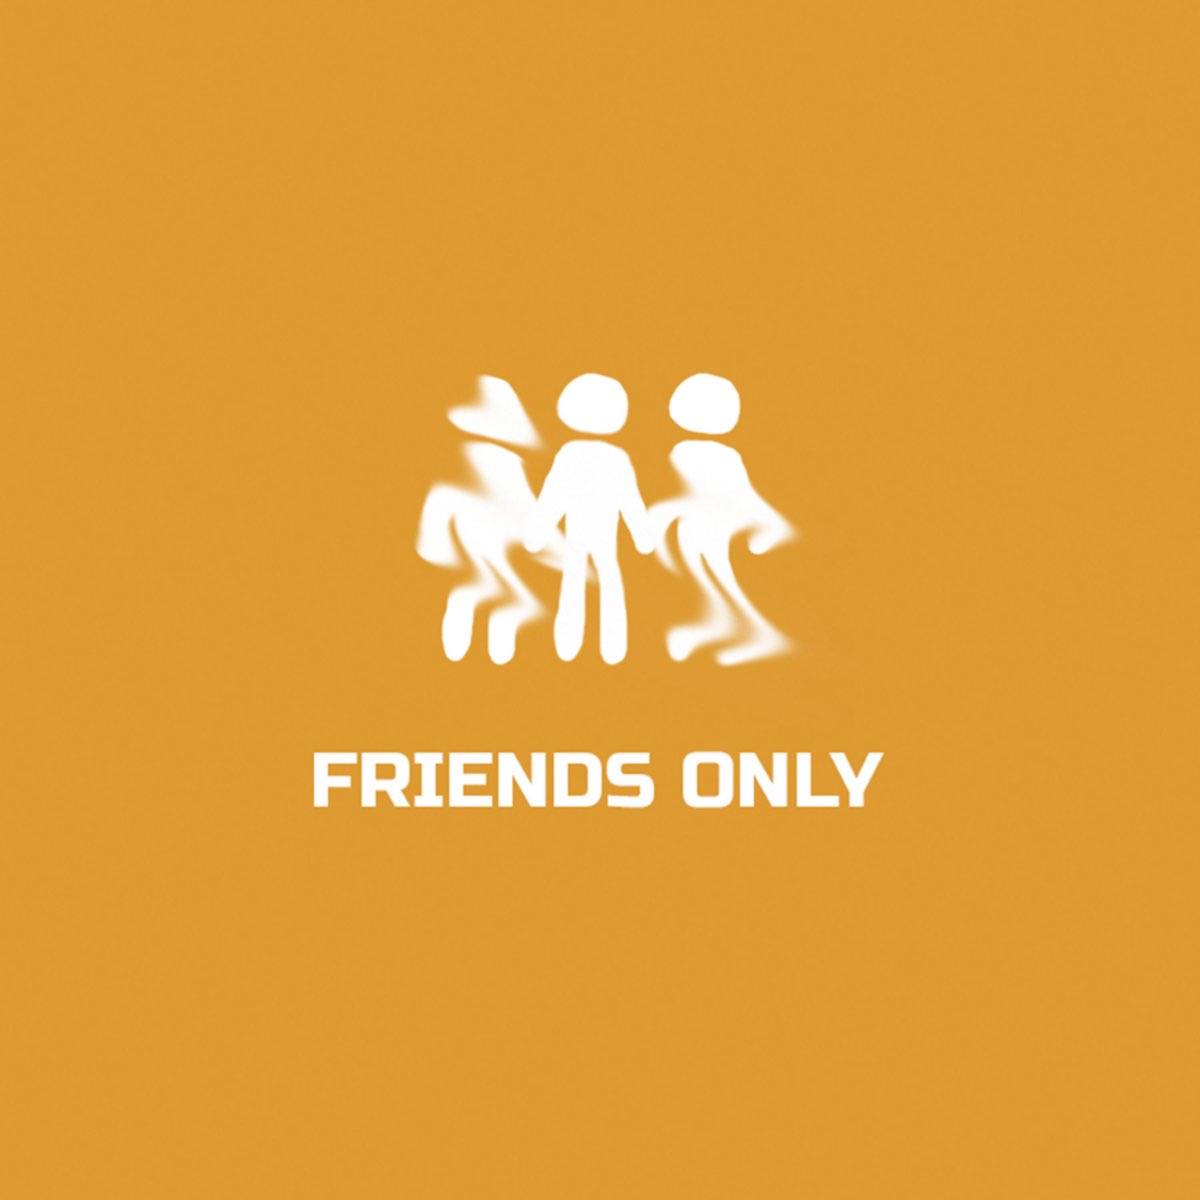 Онлифрендз. Only friends. V 'Fri(end)s альбом. Сюжетная линия Онли френдс. Онли френд